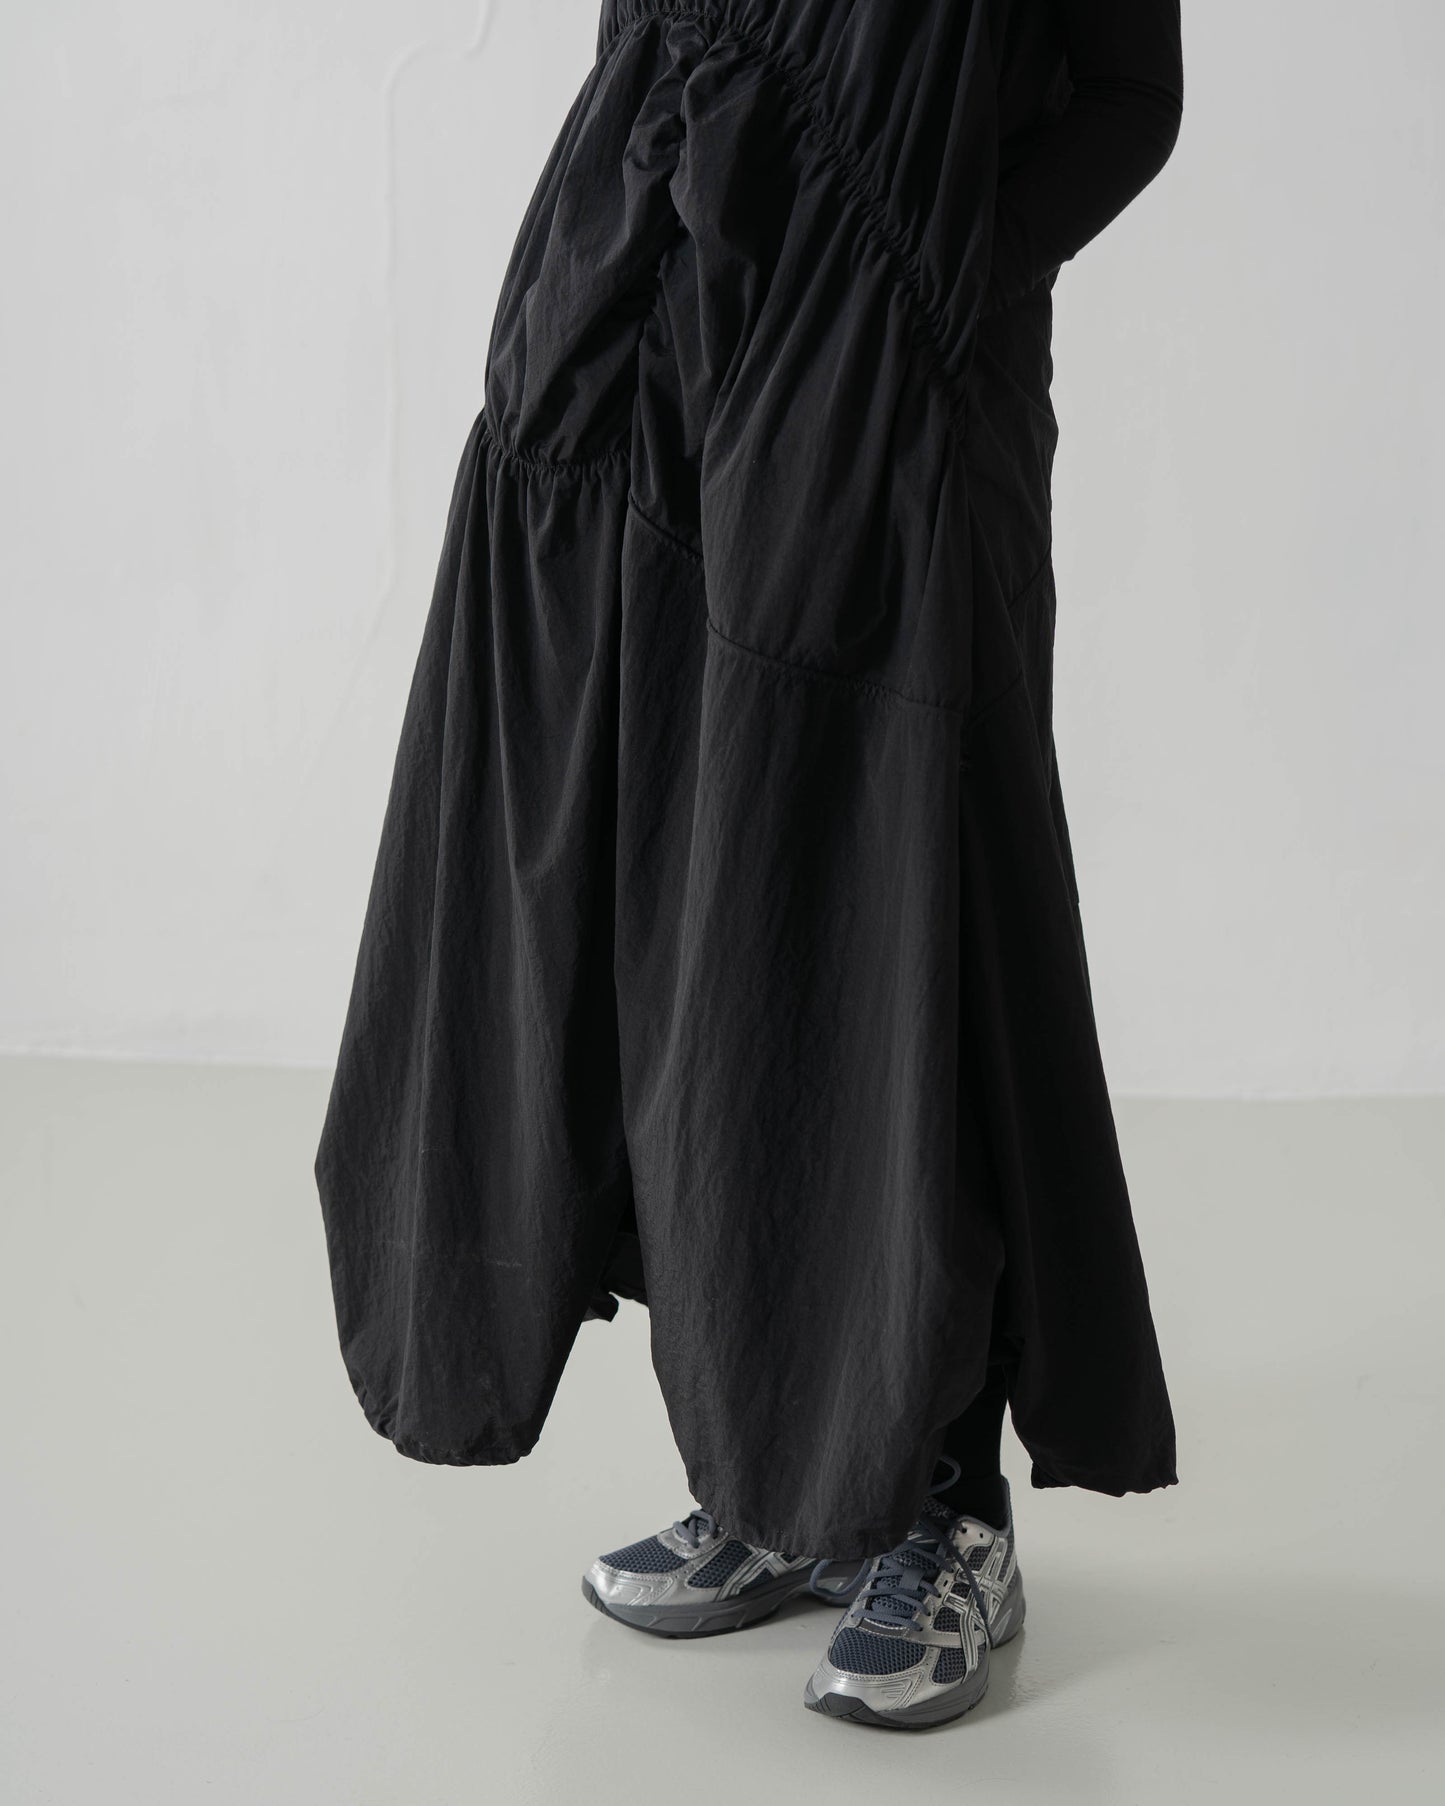 
                  
                    Irrgular Elastic Ruffle Dress Black 【L23-31BK】
                  
                